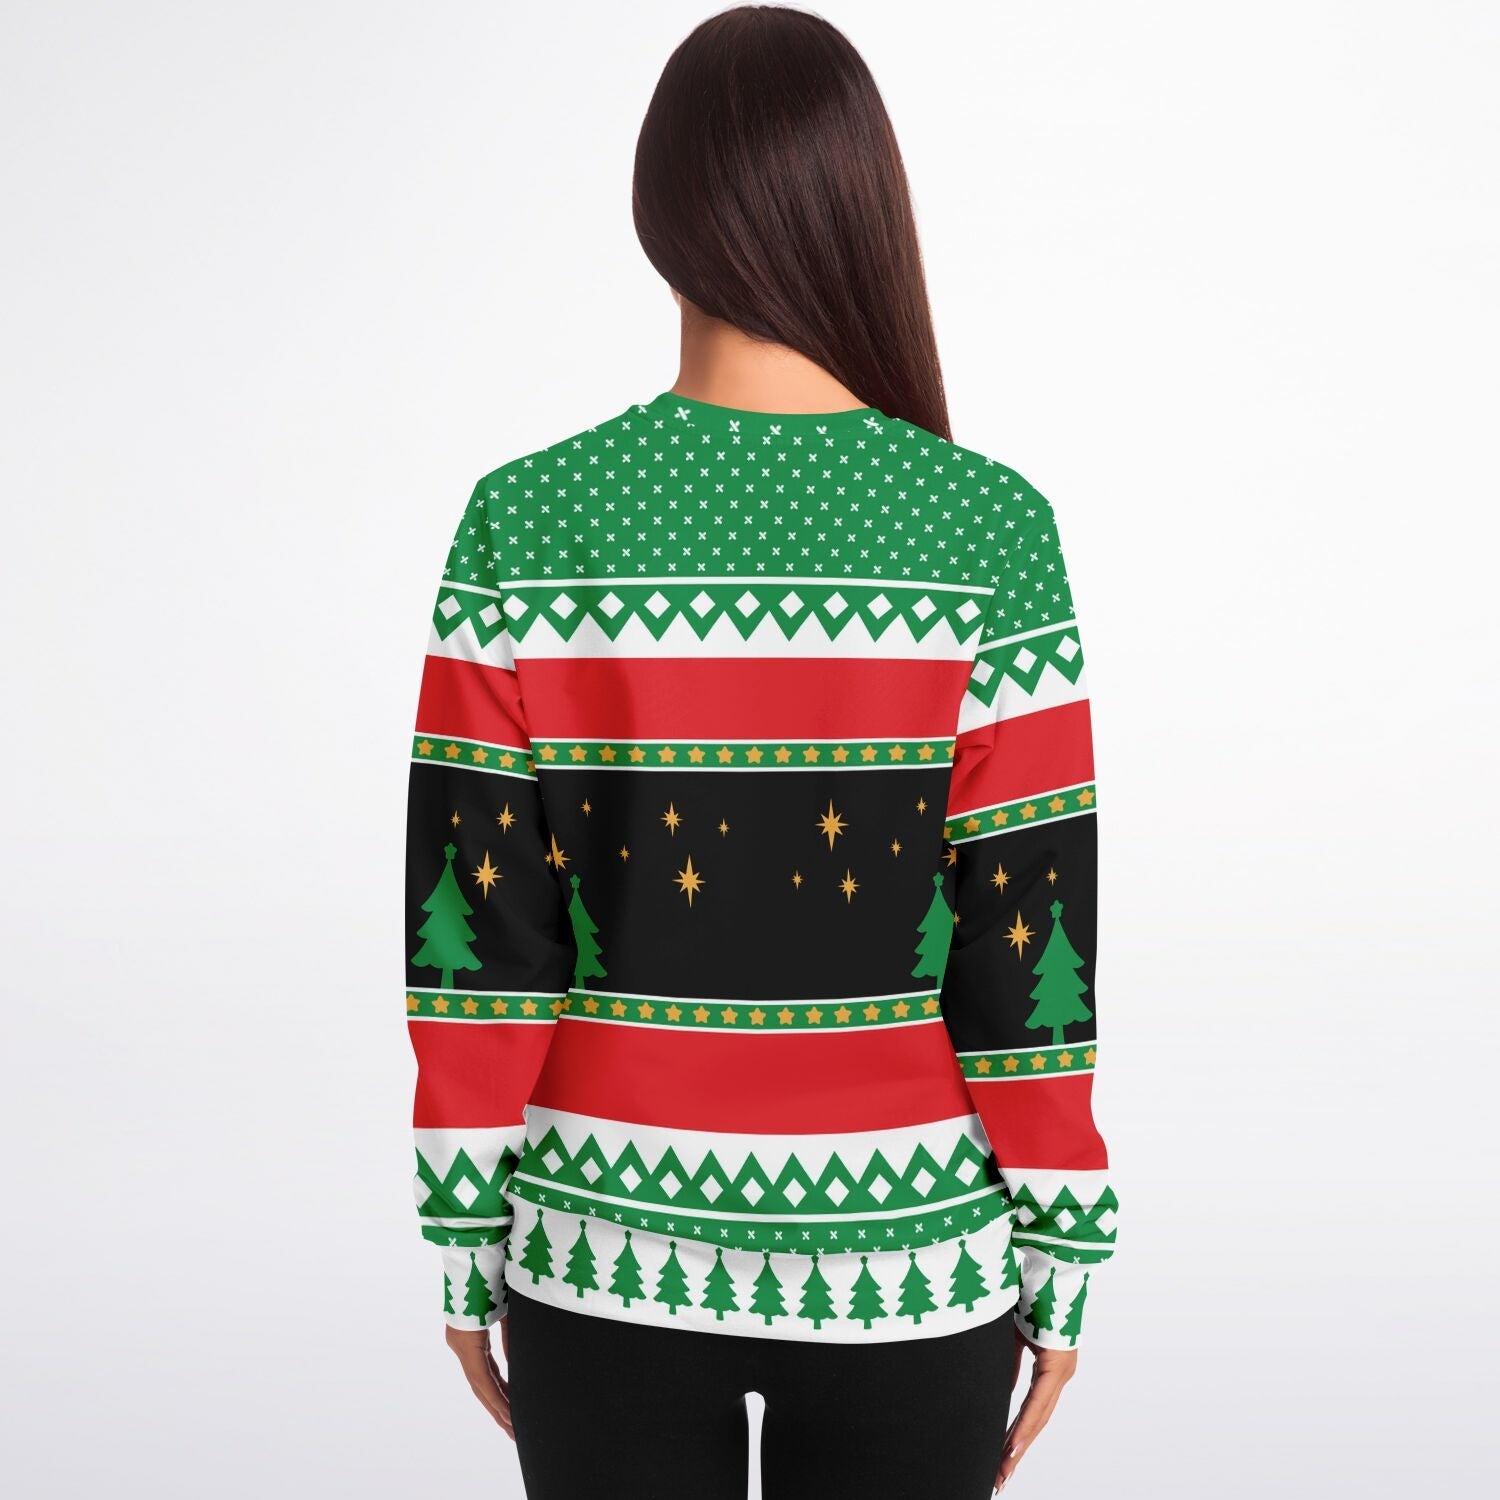 Your Gift's in the Box Ugly Christmas Sweatshirt Fashion Sweatshirt - AOP Subliminator 